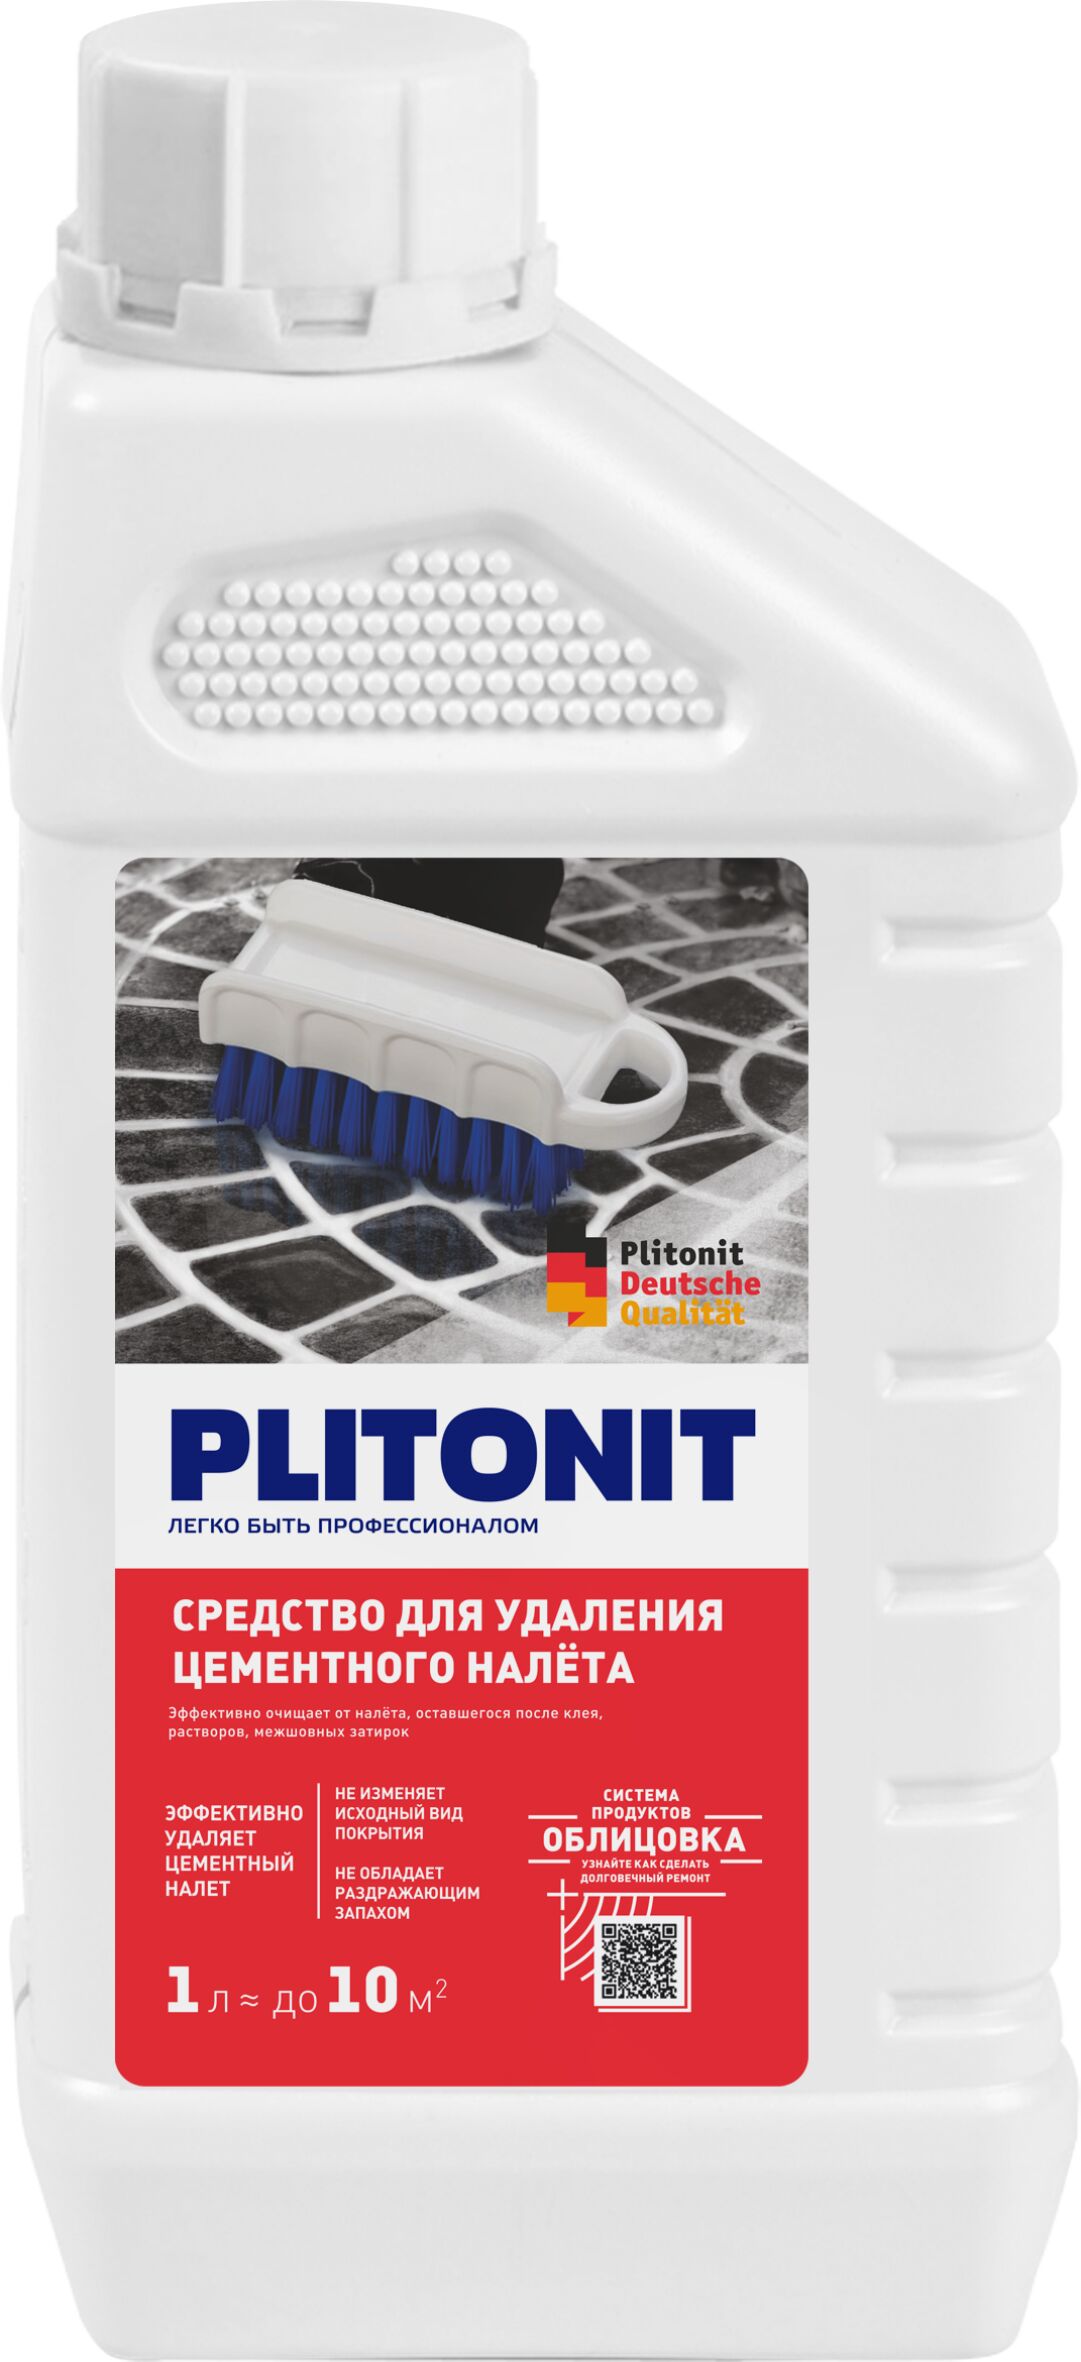 PLITONIT cредство для удаления цементного налета - 1 л. (РФ)